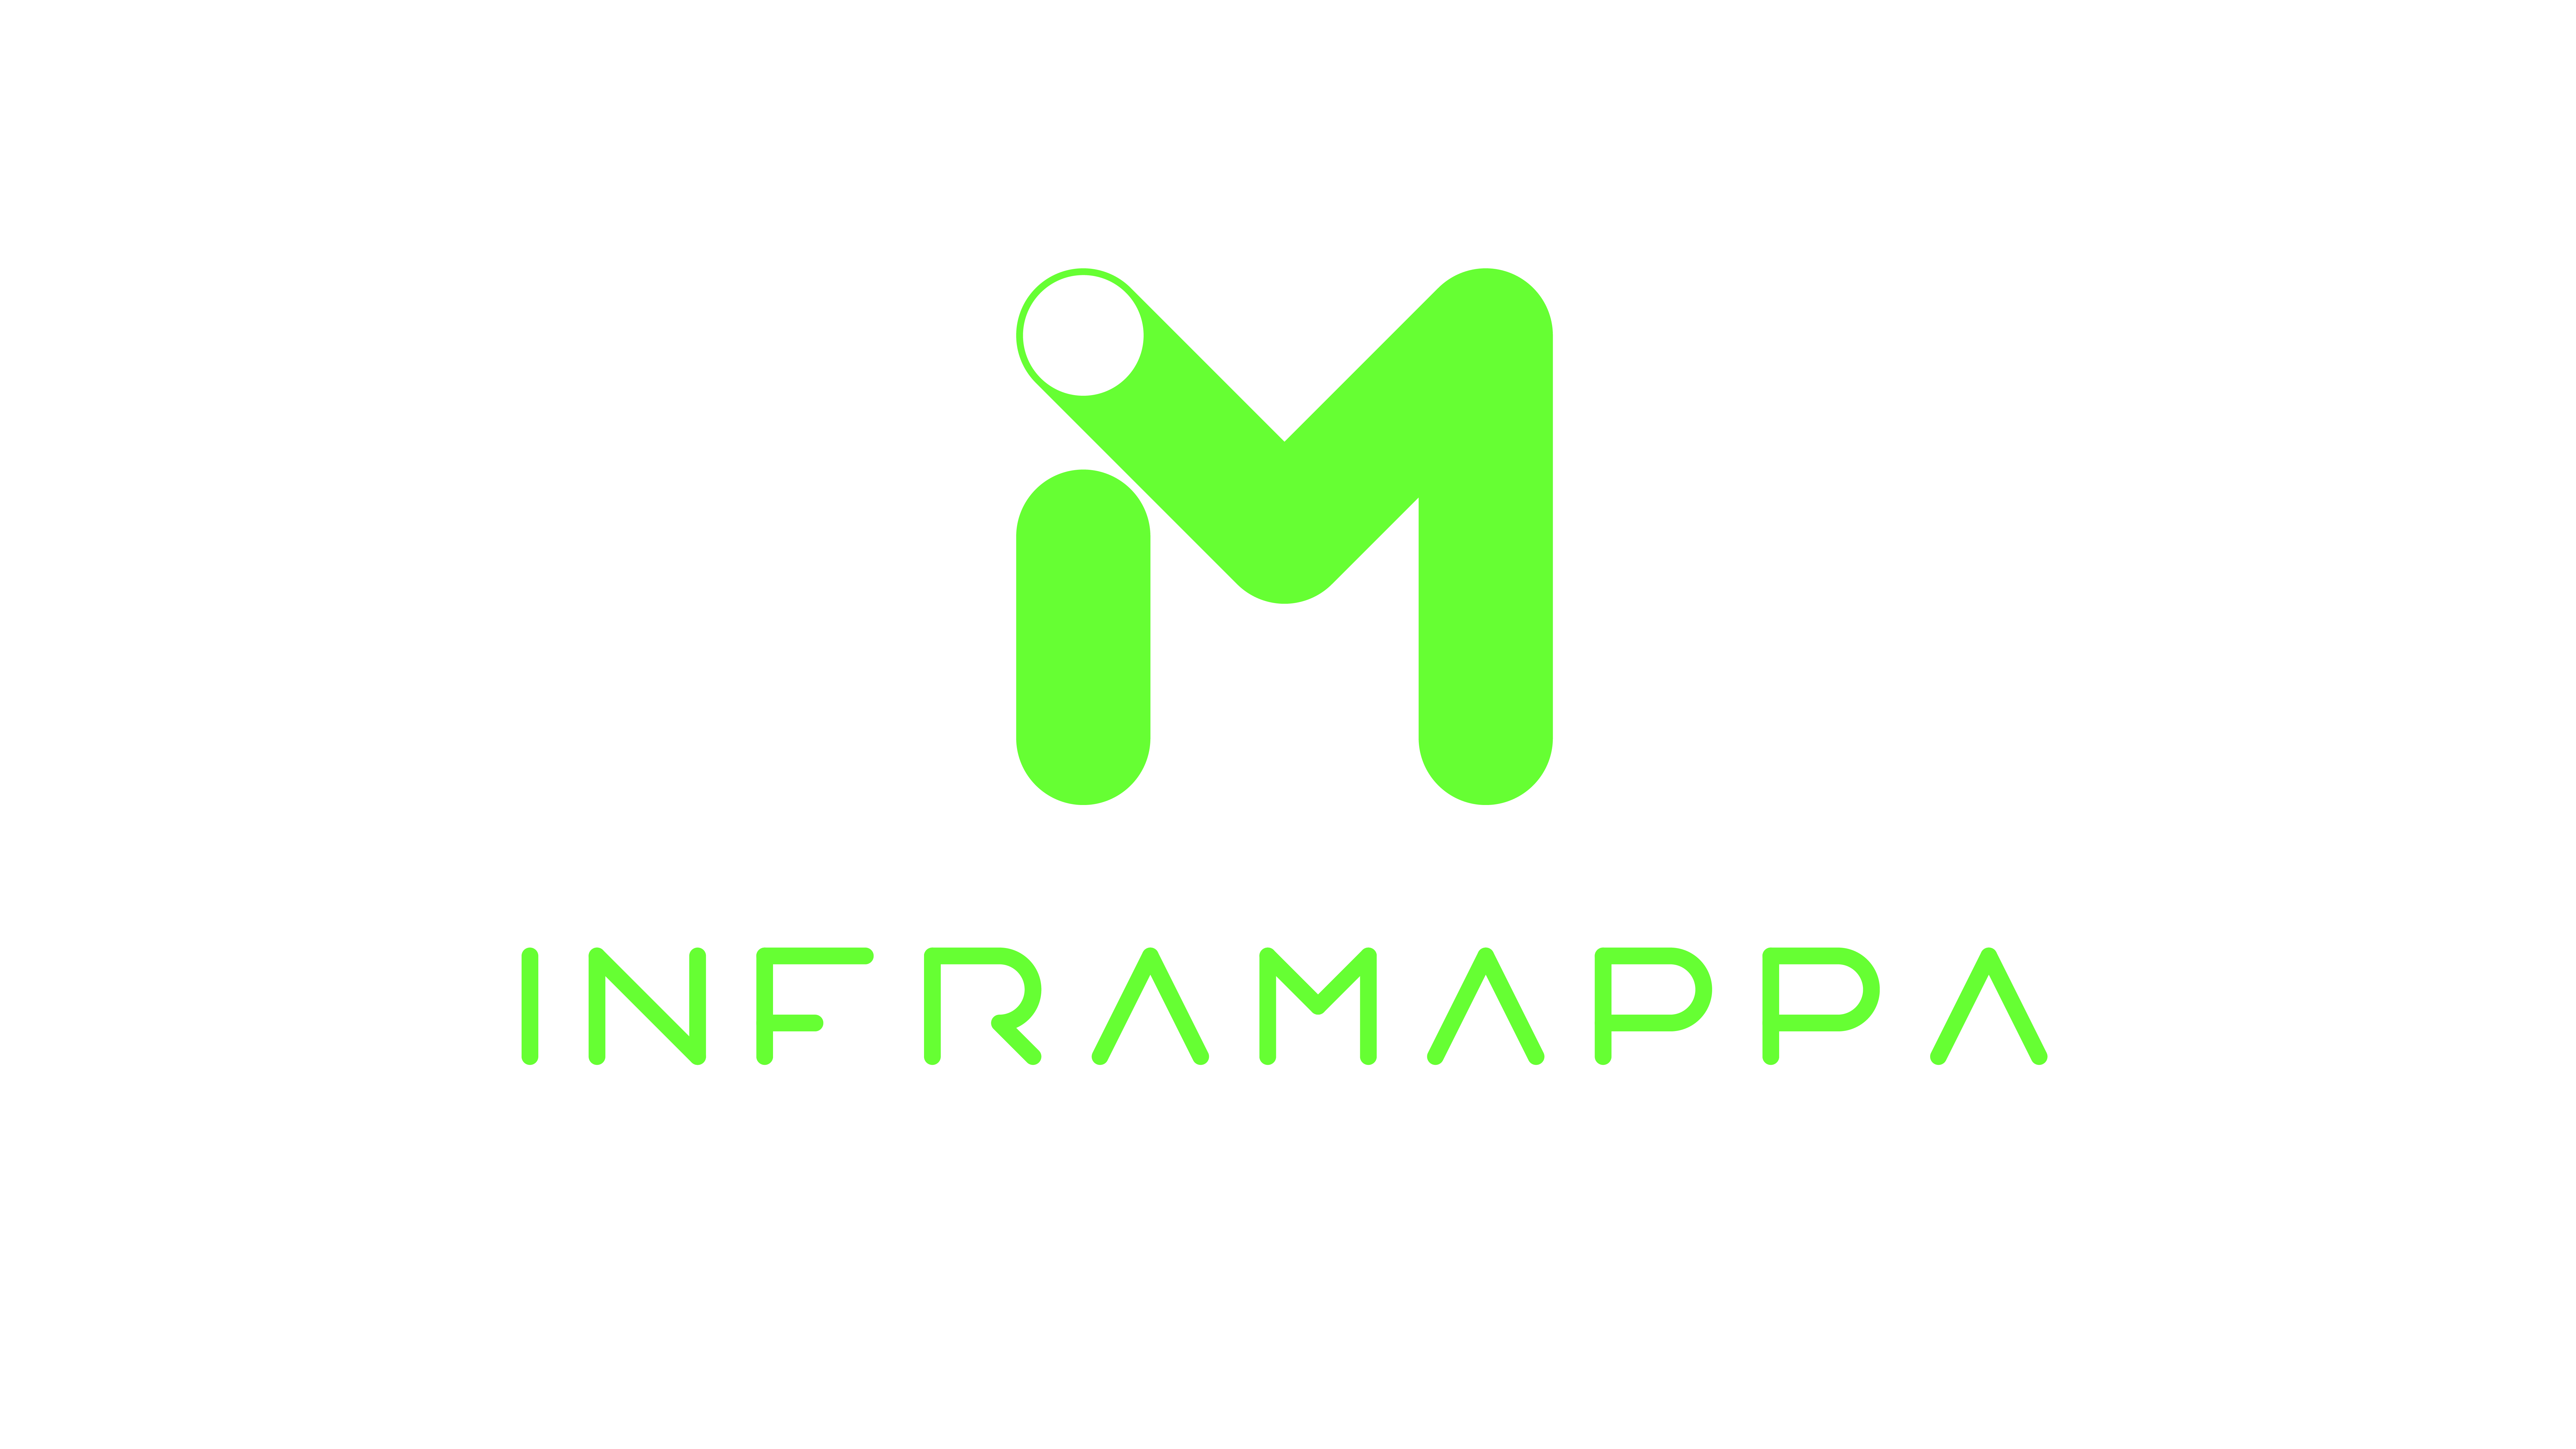 Inframappa, Inc